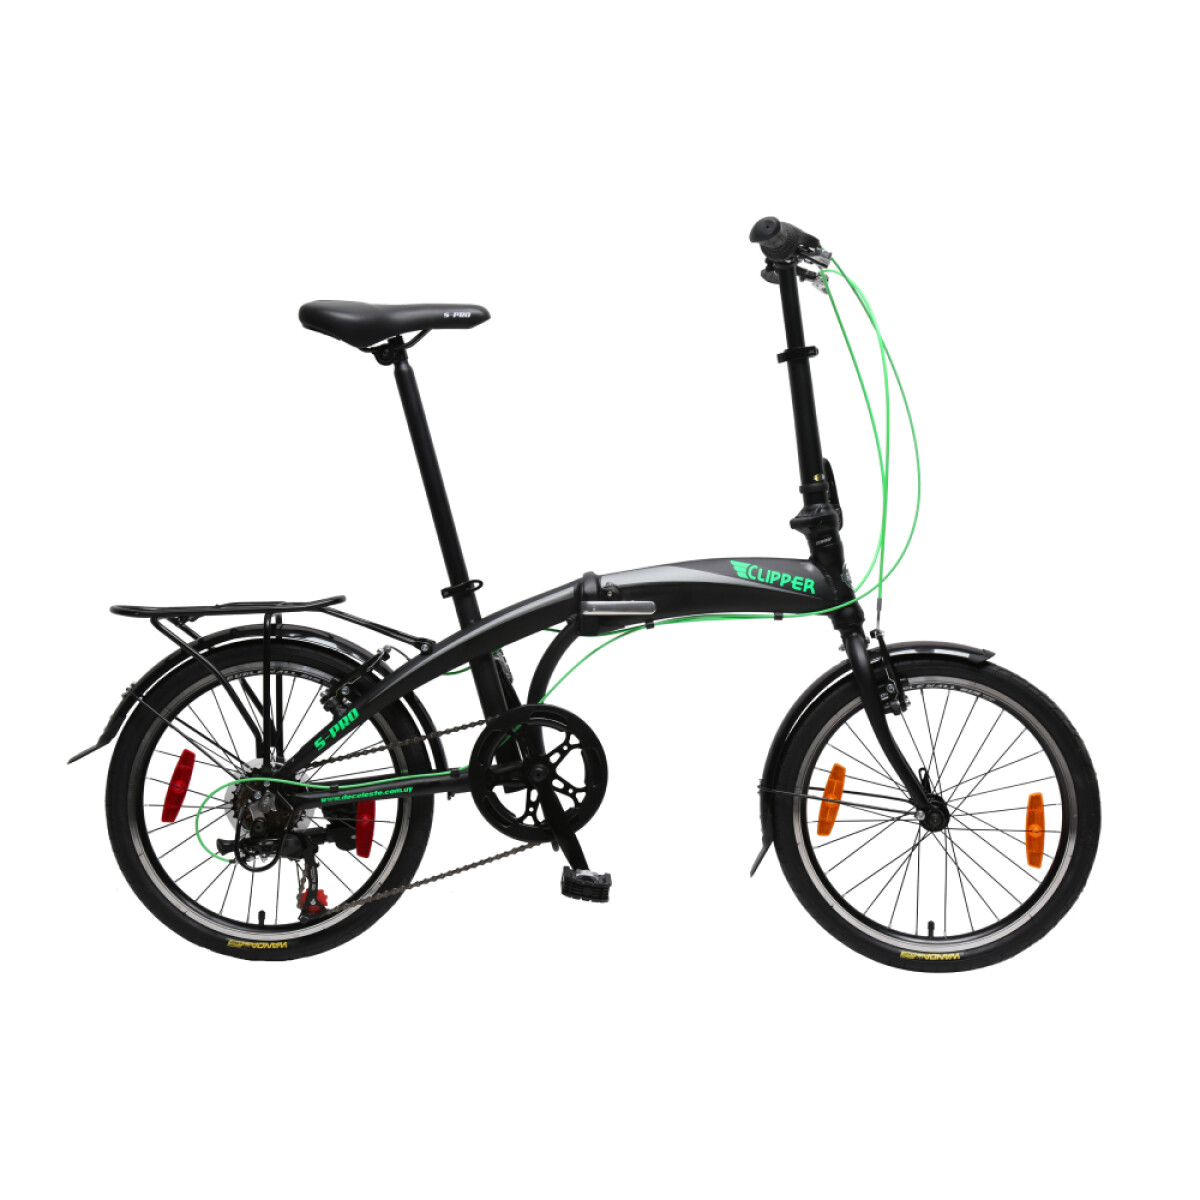 Bicicleta S-PRO Clipper - Negro y Verde 